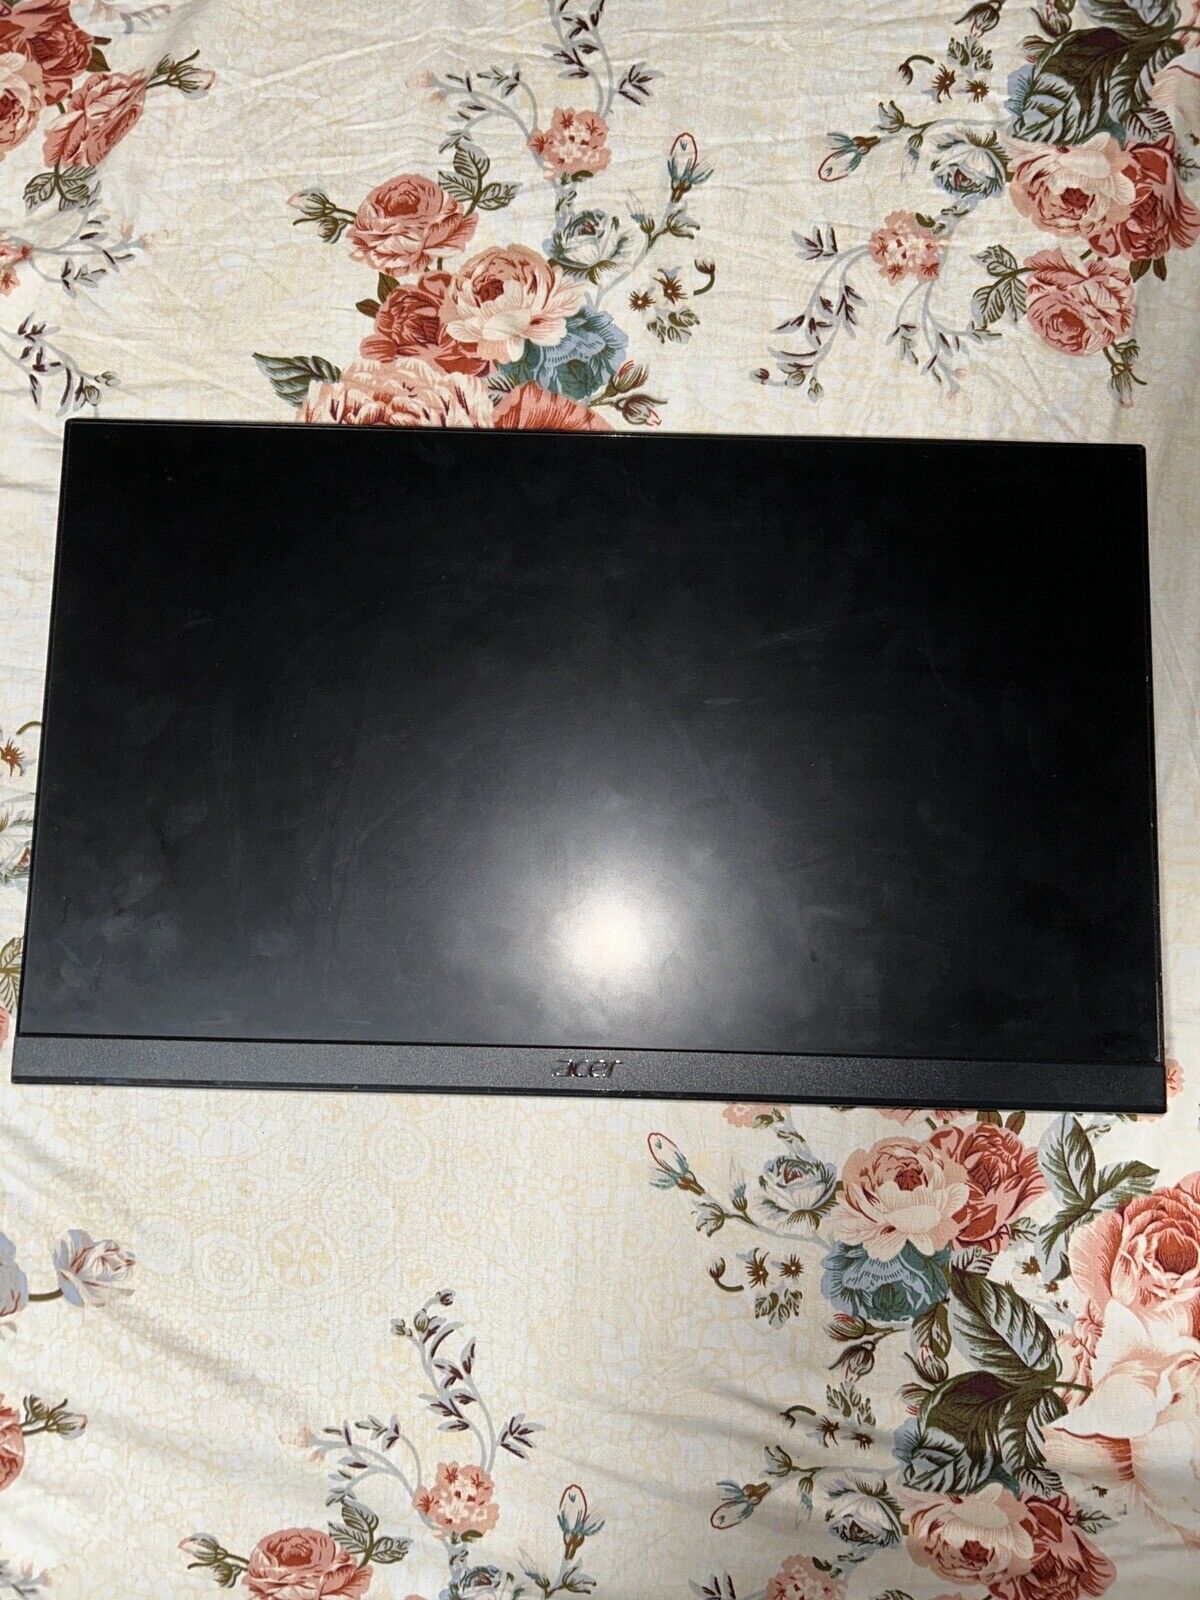 Acer SB220Q 22 Inch | Full HD | 75 Hz | Desktop Monitor | With Original Box